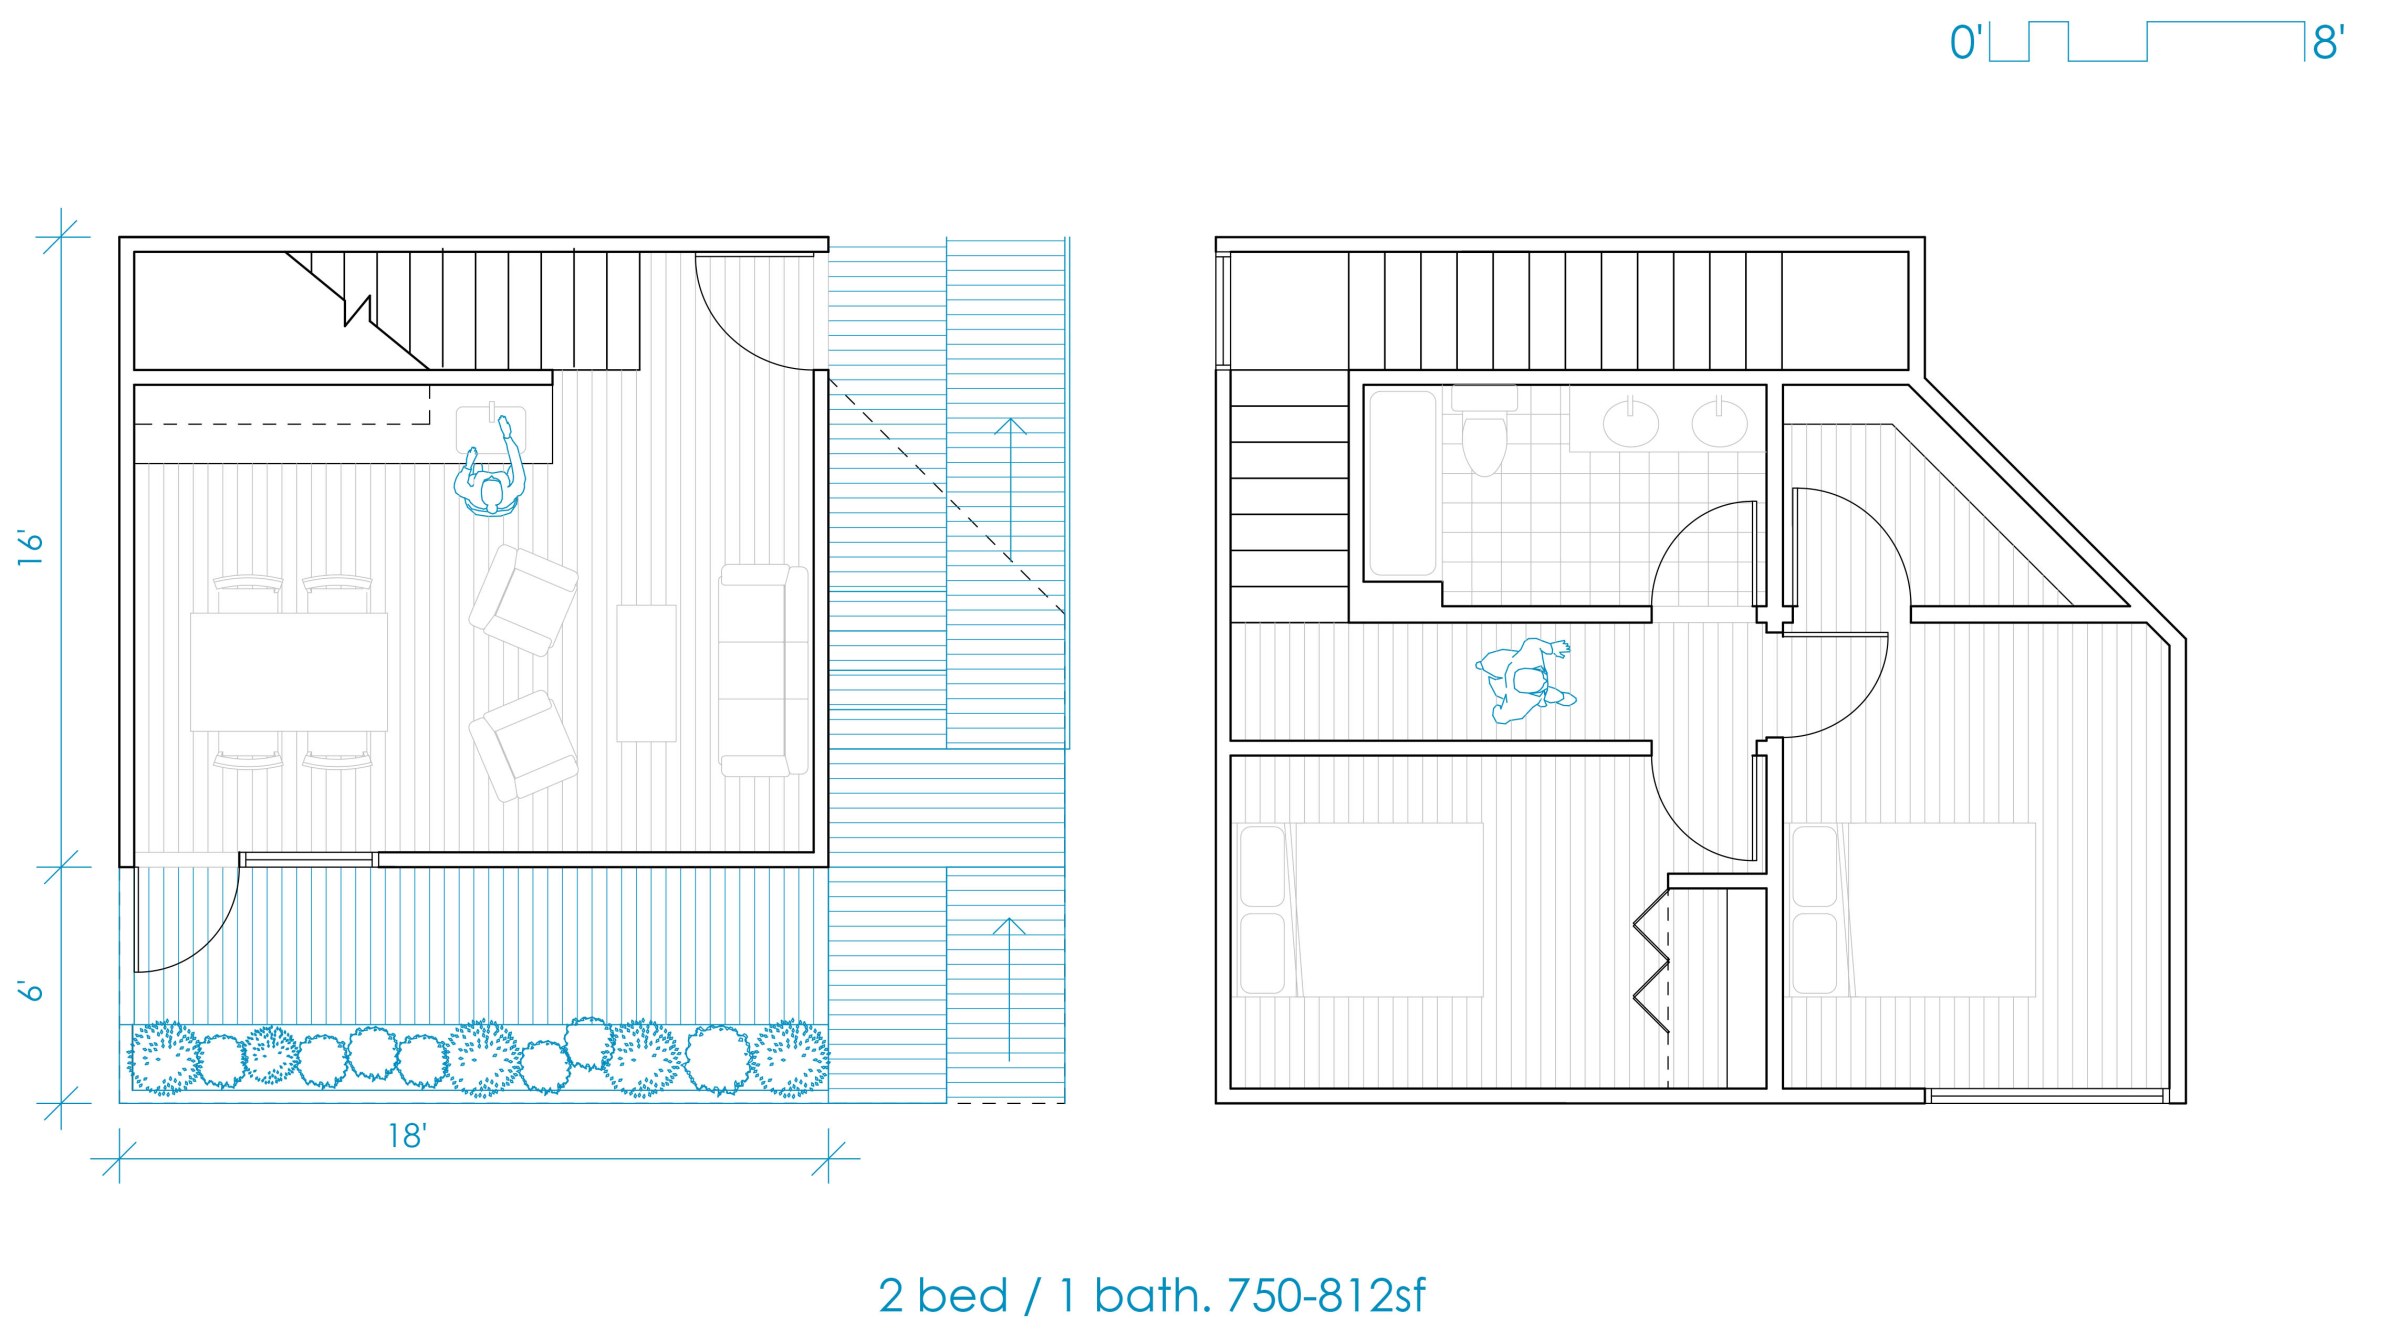 Daniel Tighe's thesis project: 2 bedroom 1 bathroom front floor plan, long